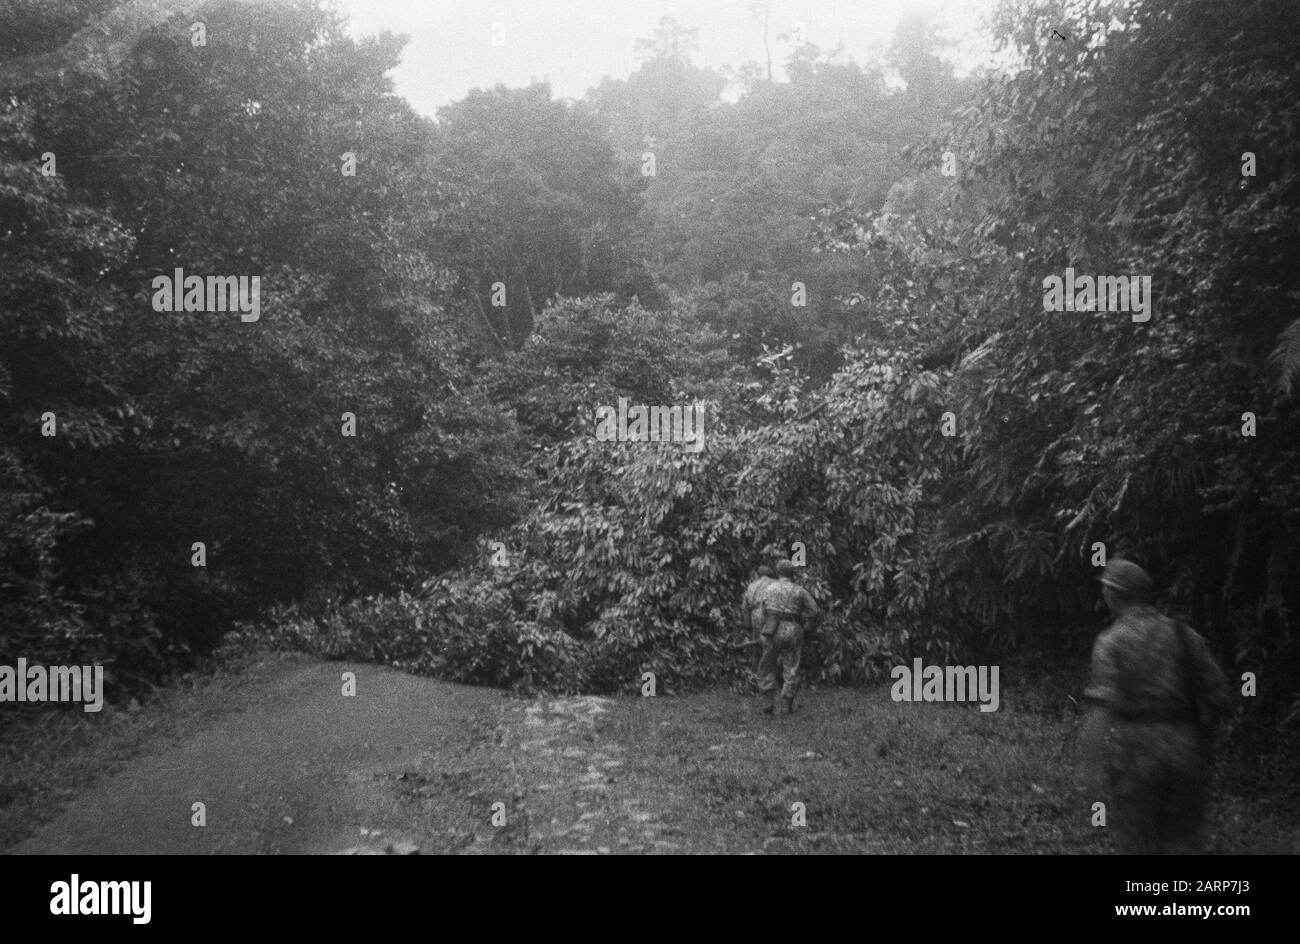 Loeboek Pakem en Baoengan  [a patrol stumbles upon a chopped tree as a roadblock} Date: 29 July 1948 Location: Indonesia, Dutch East Indies, Sumatra Stock Photo